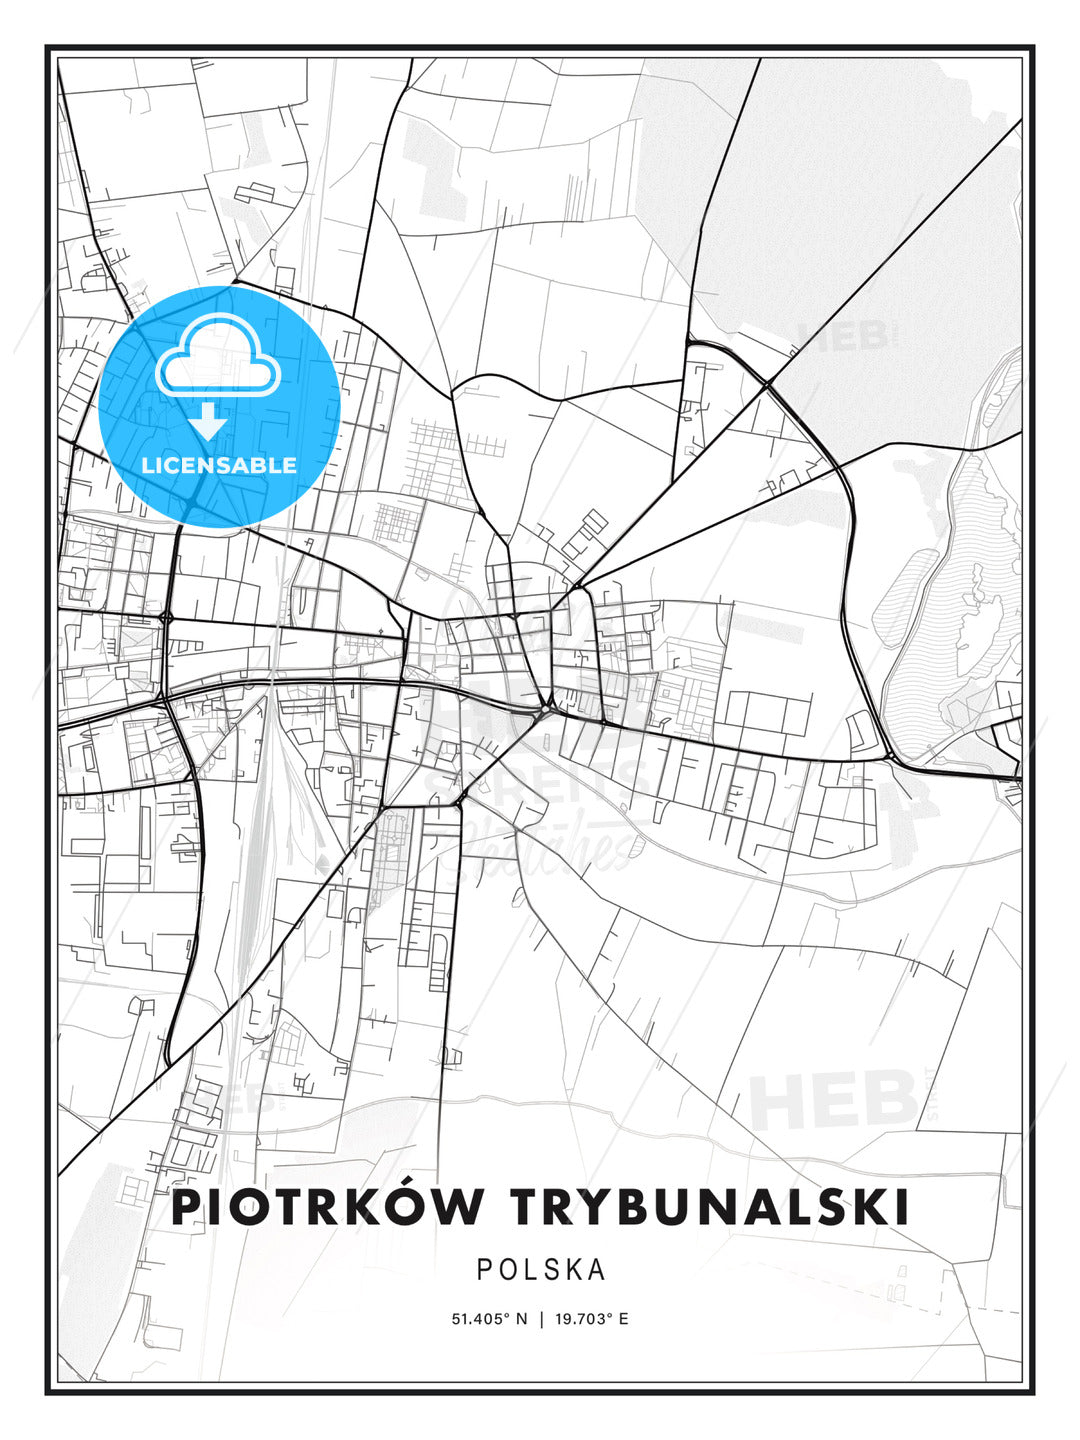 Piotrków Trybunalski, Poland, Modern Print Template in Various Formats - HEBSTREITS Sketches